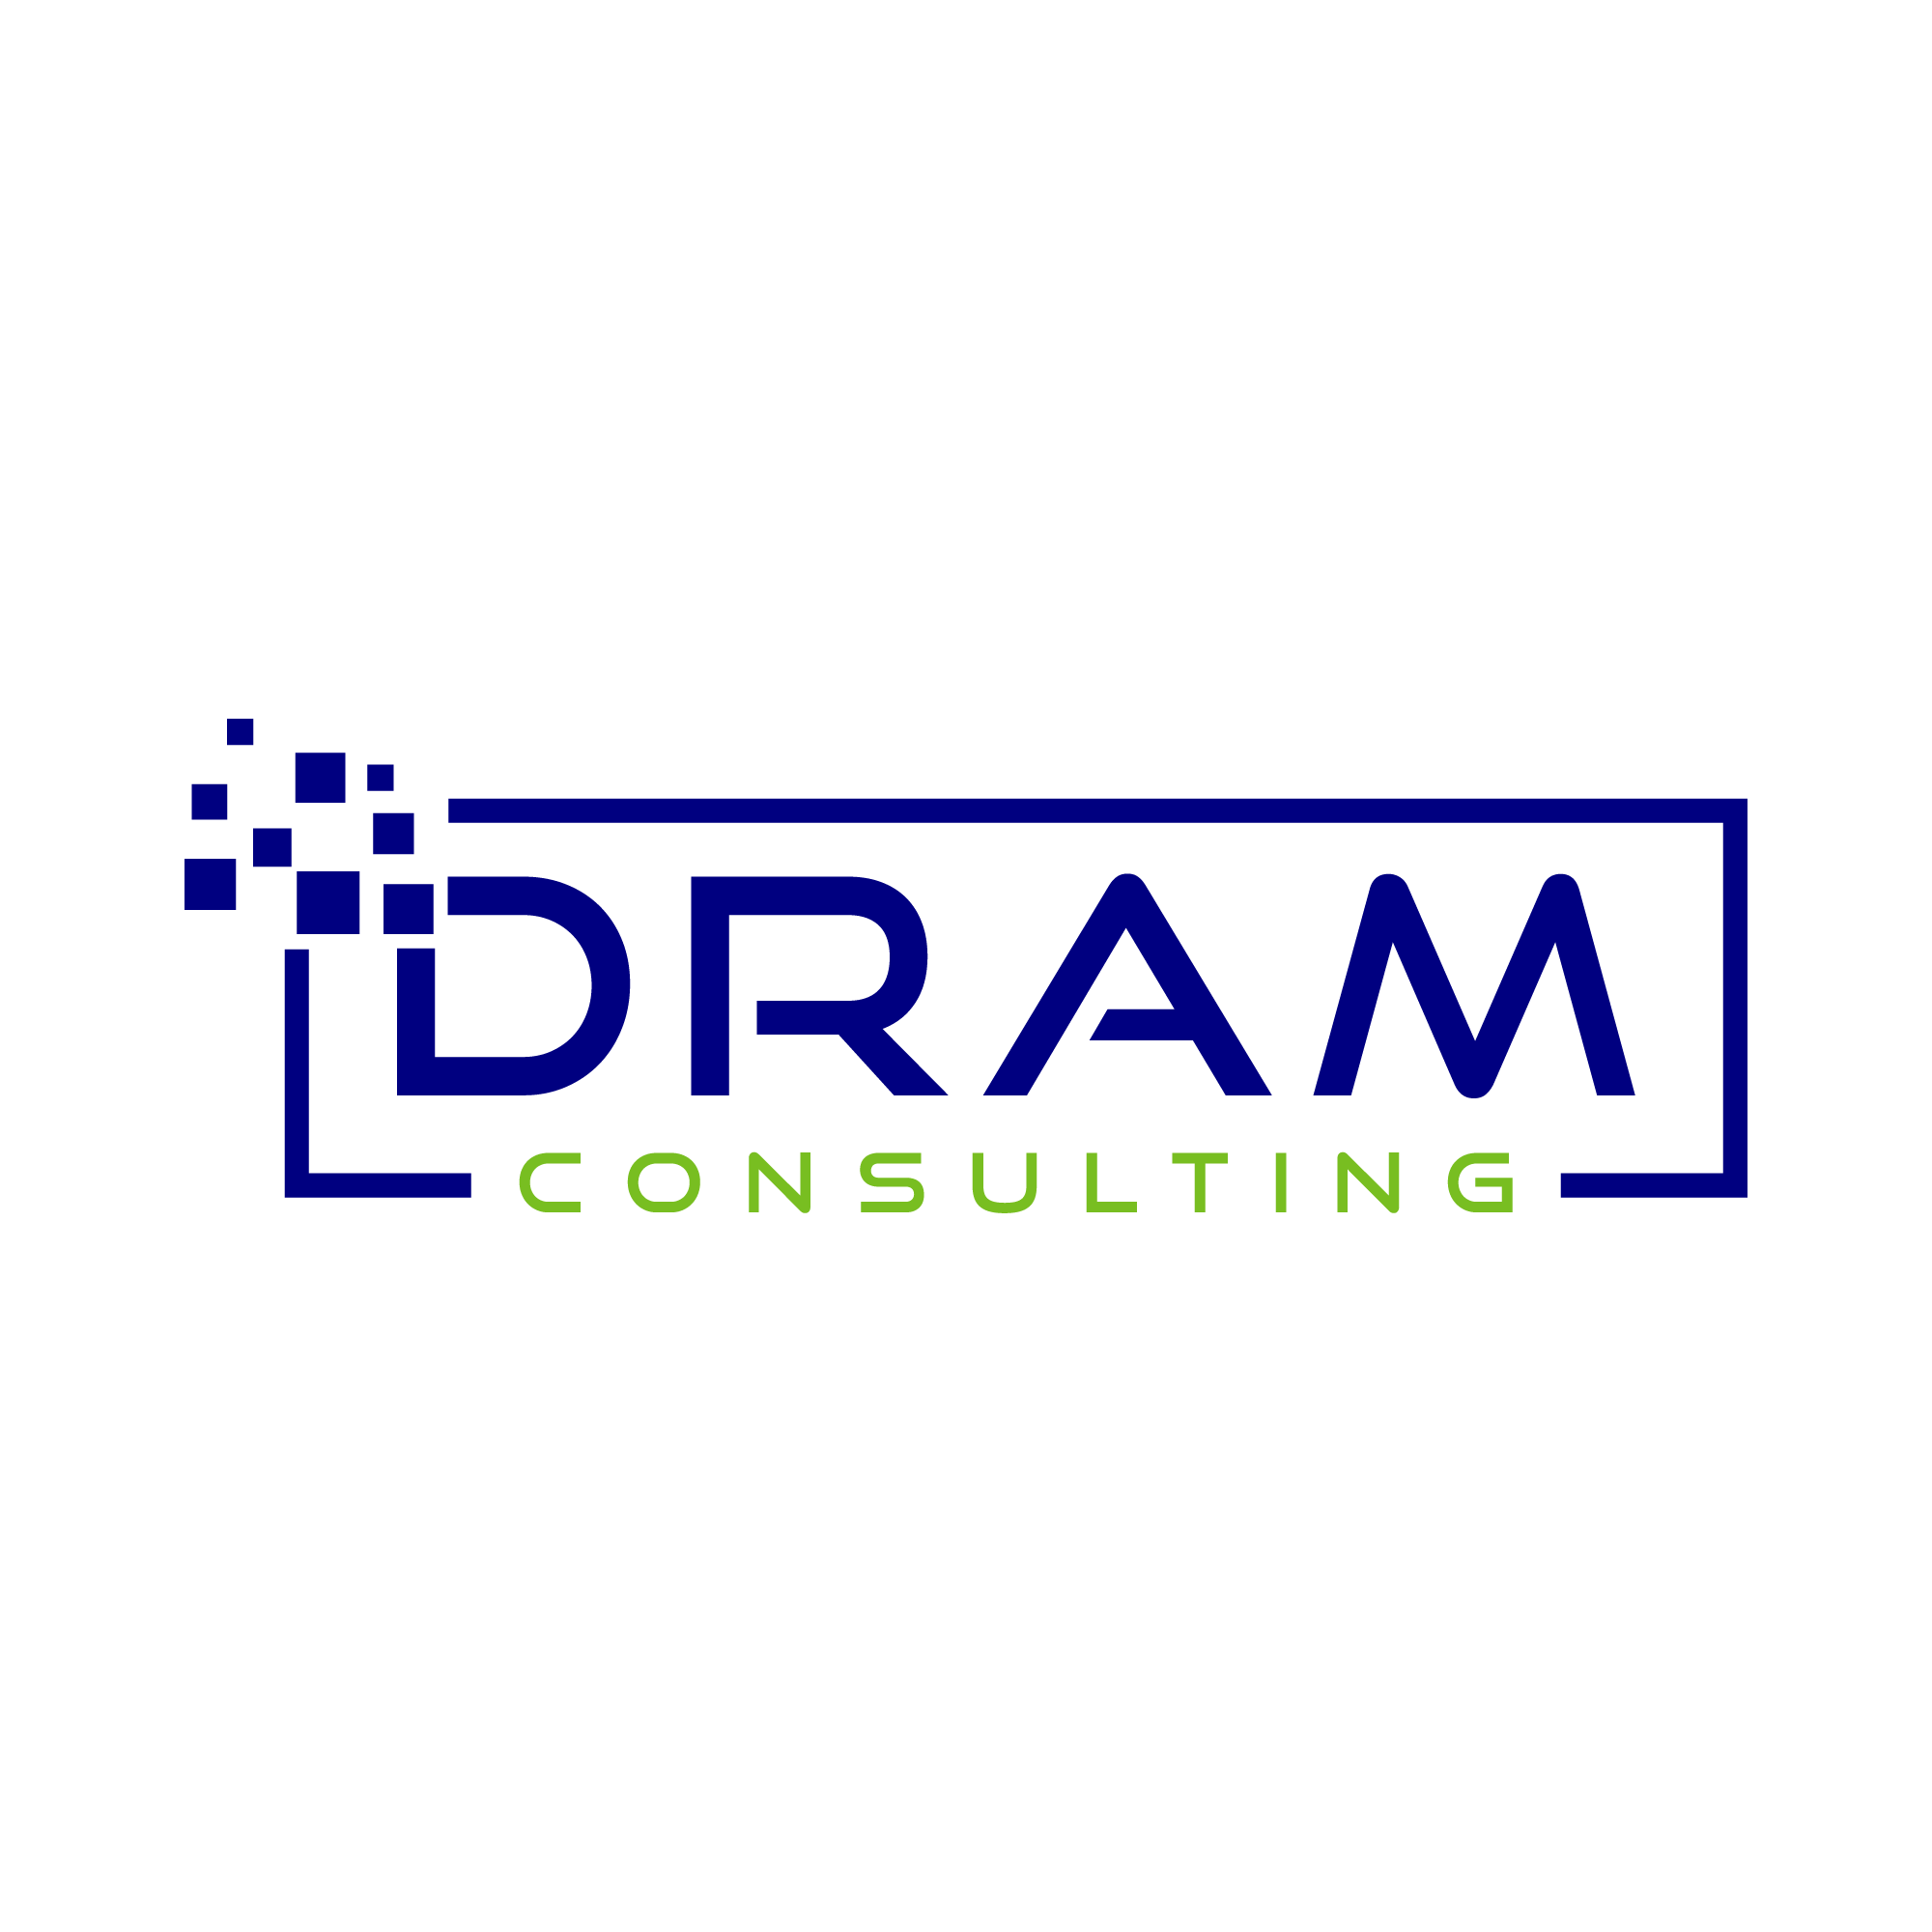 Dram Logo - LogoDix